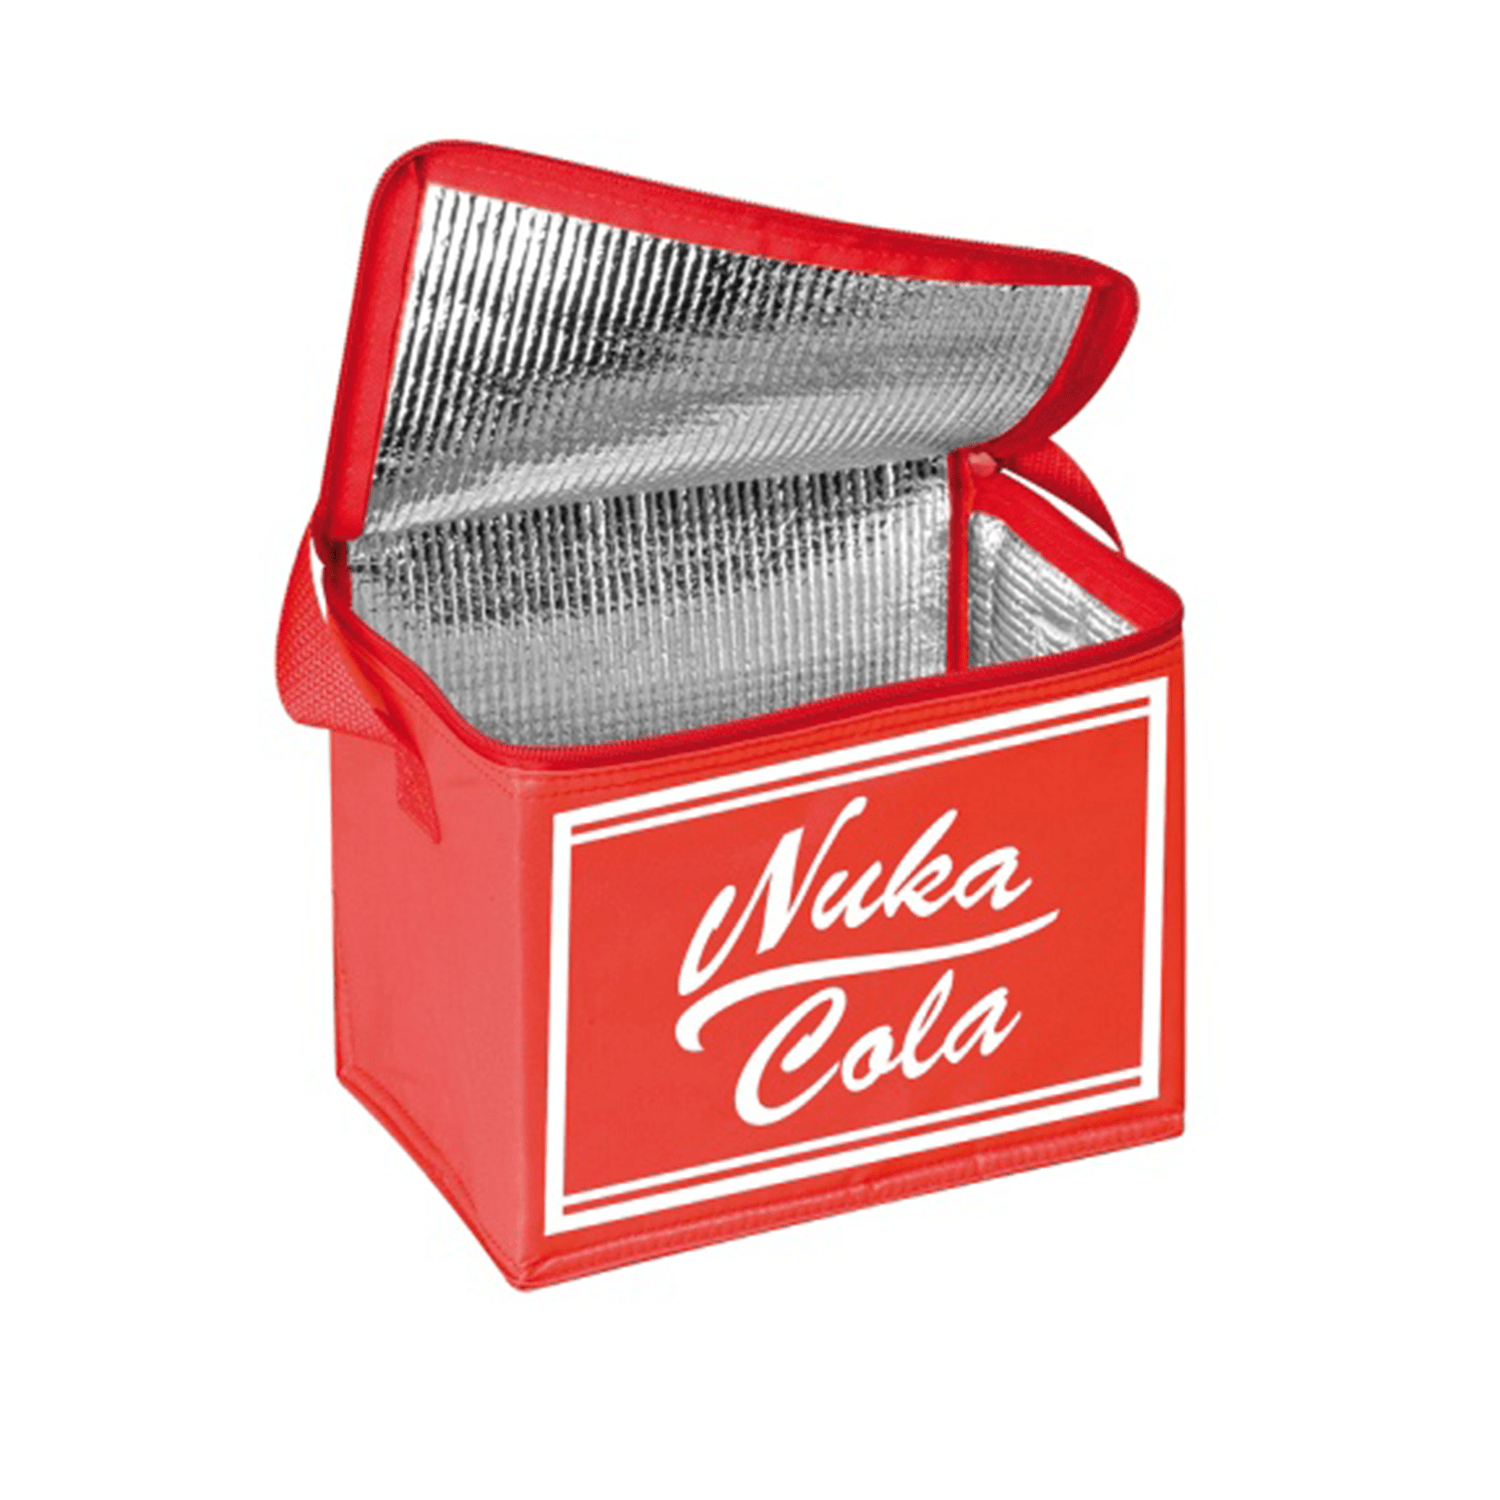 Fallout - Nuka Cola Cooler Bag